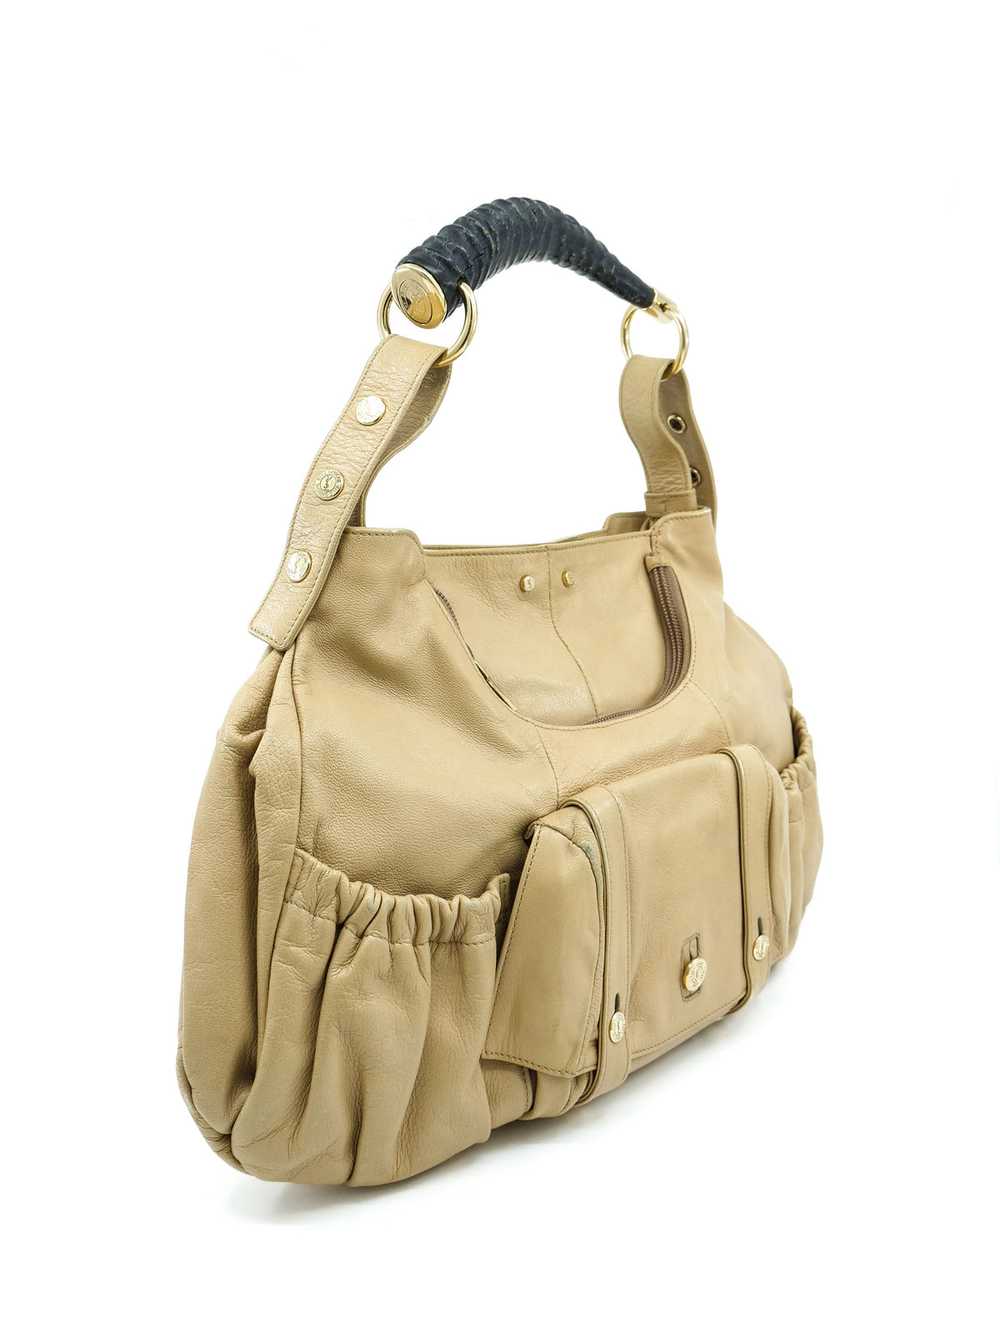 Yves Saint Laurent Beige Leather Mombasa Bag - image 3